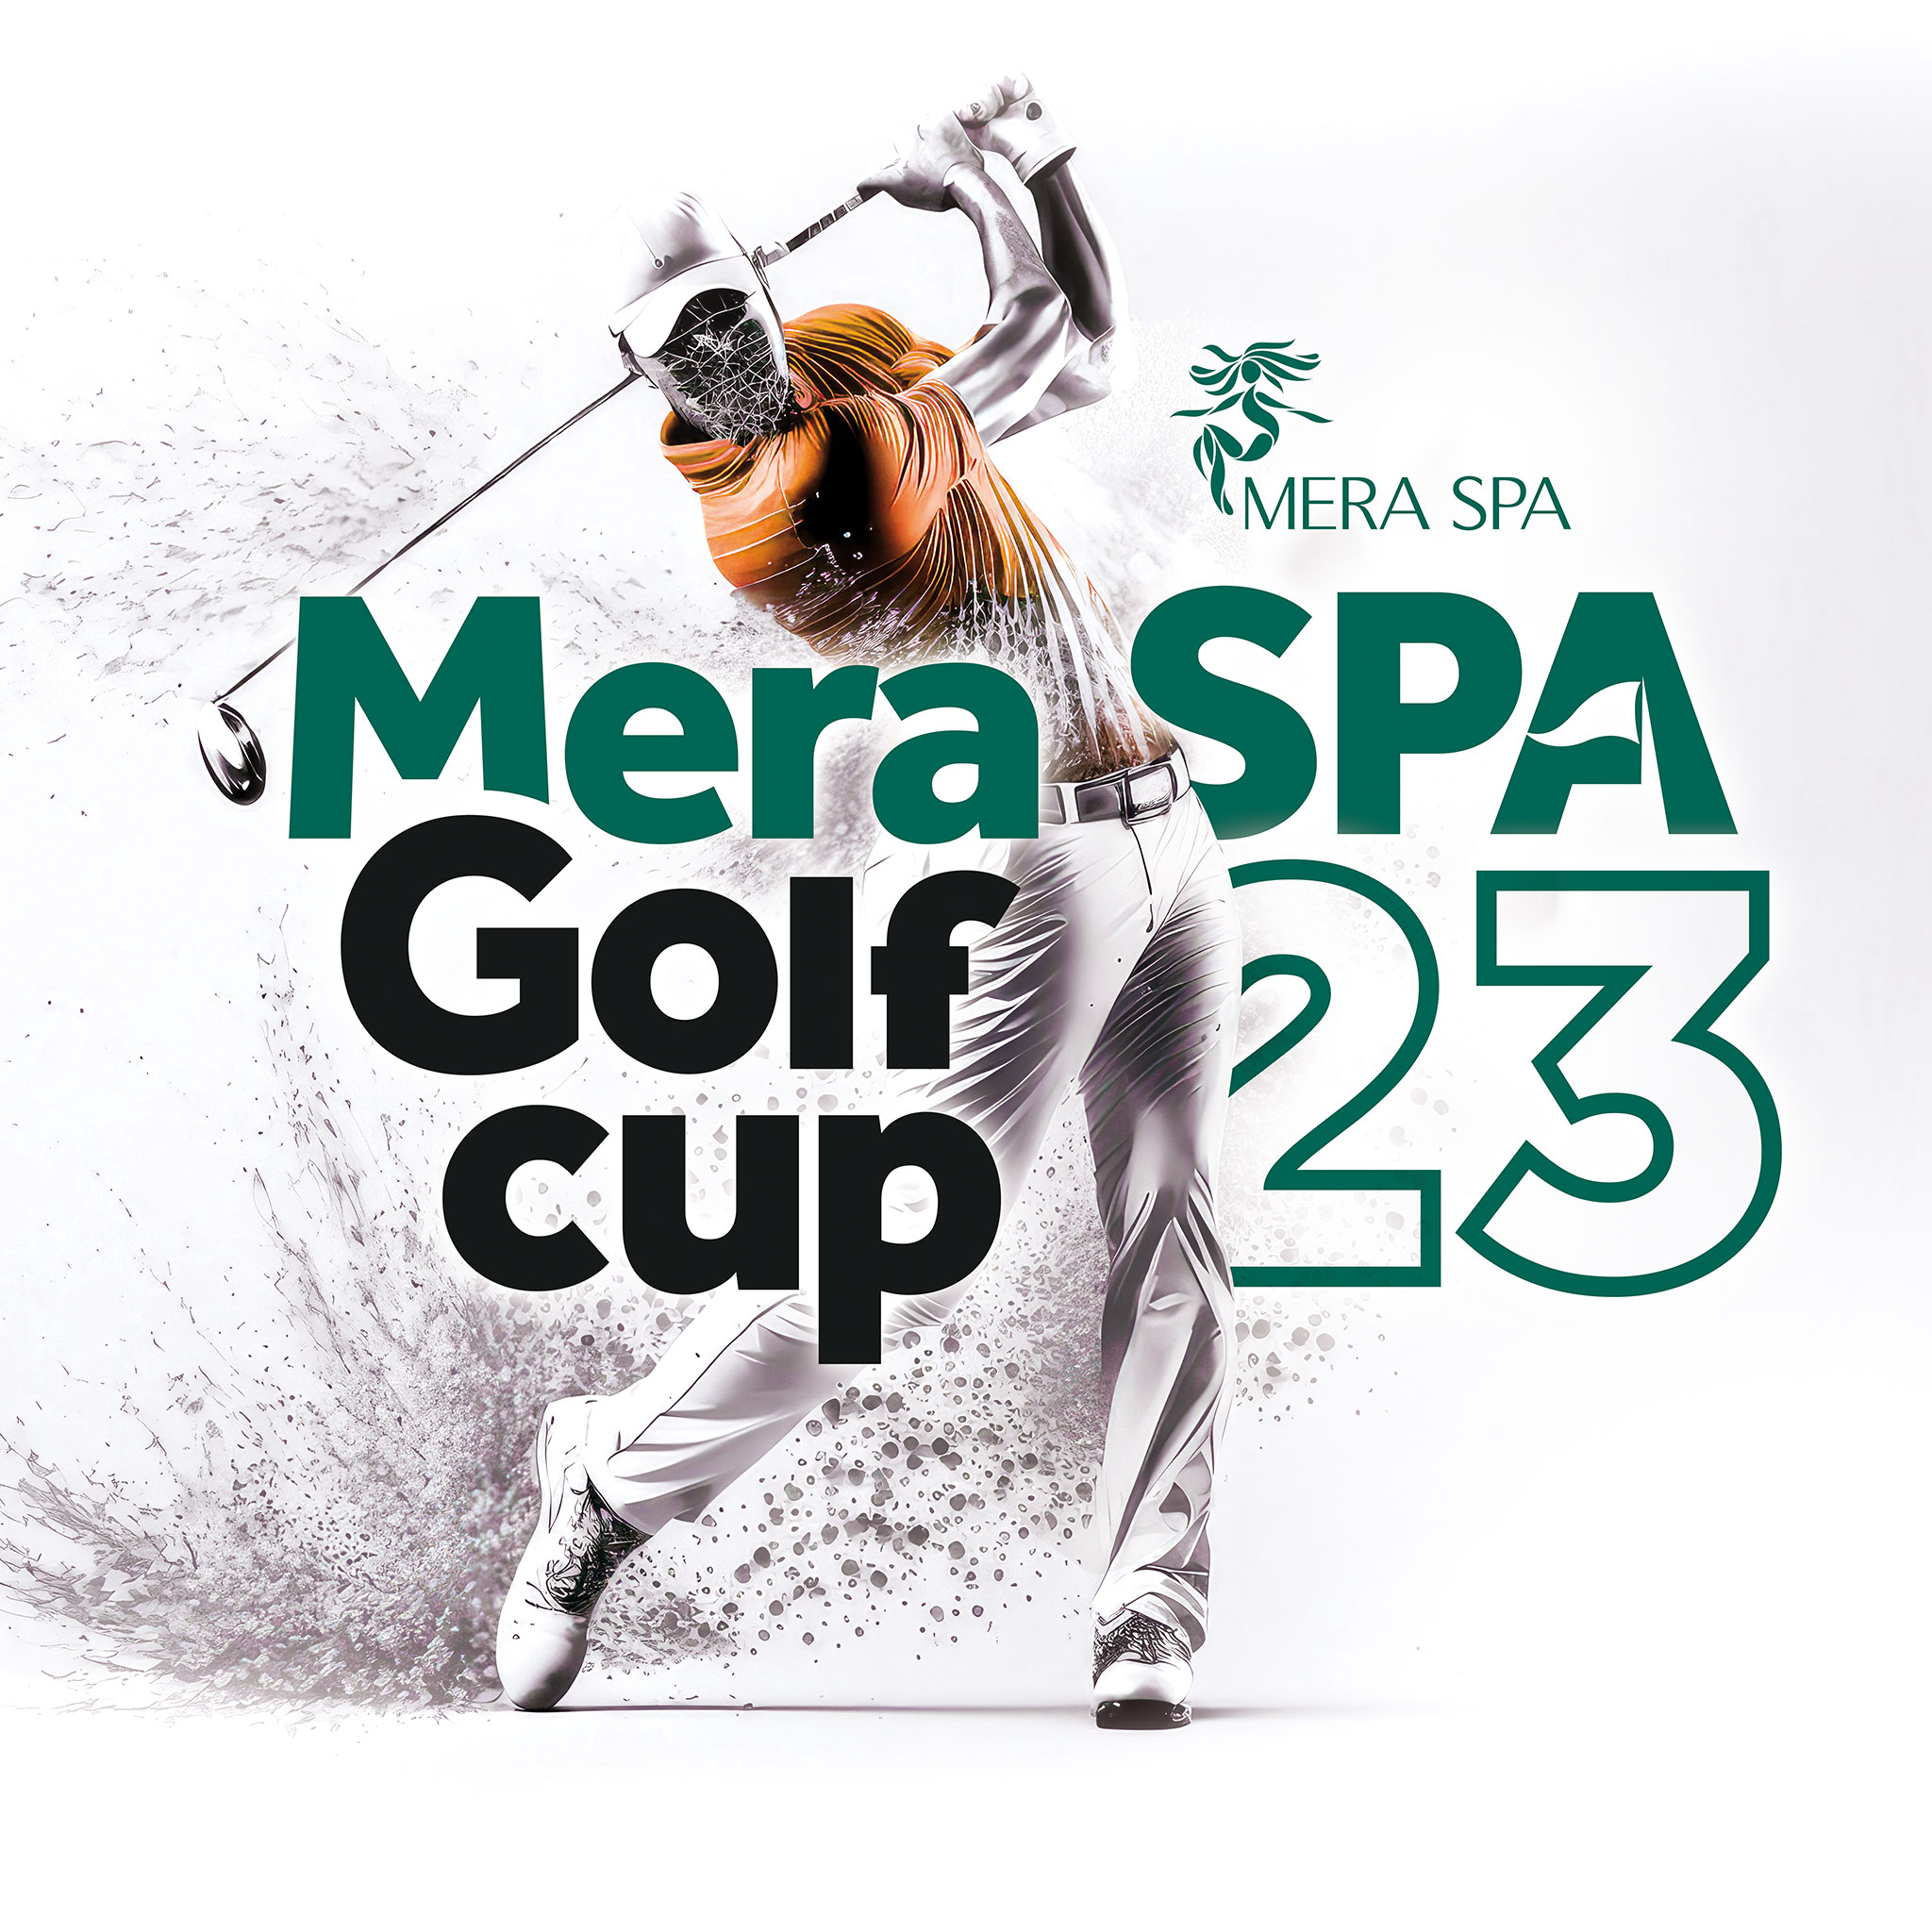 Mera SPA Golf Cup 23